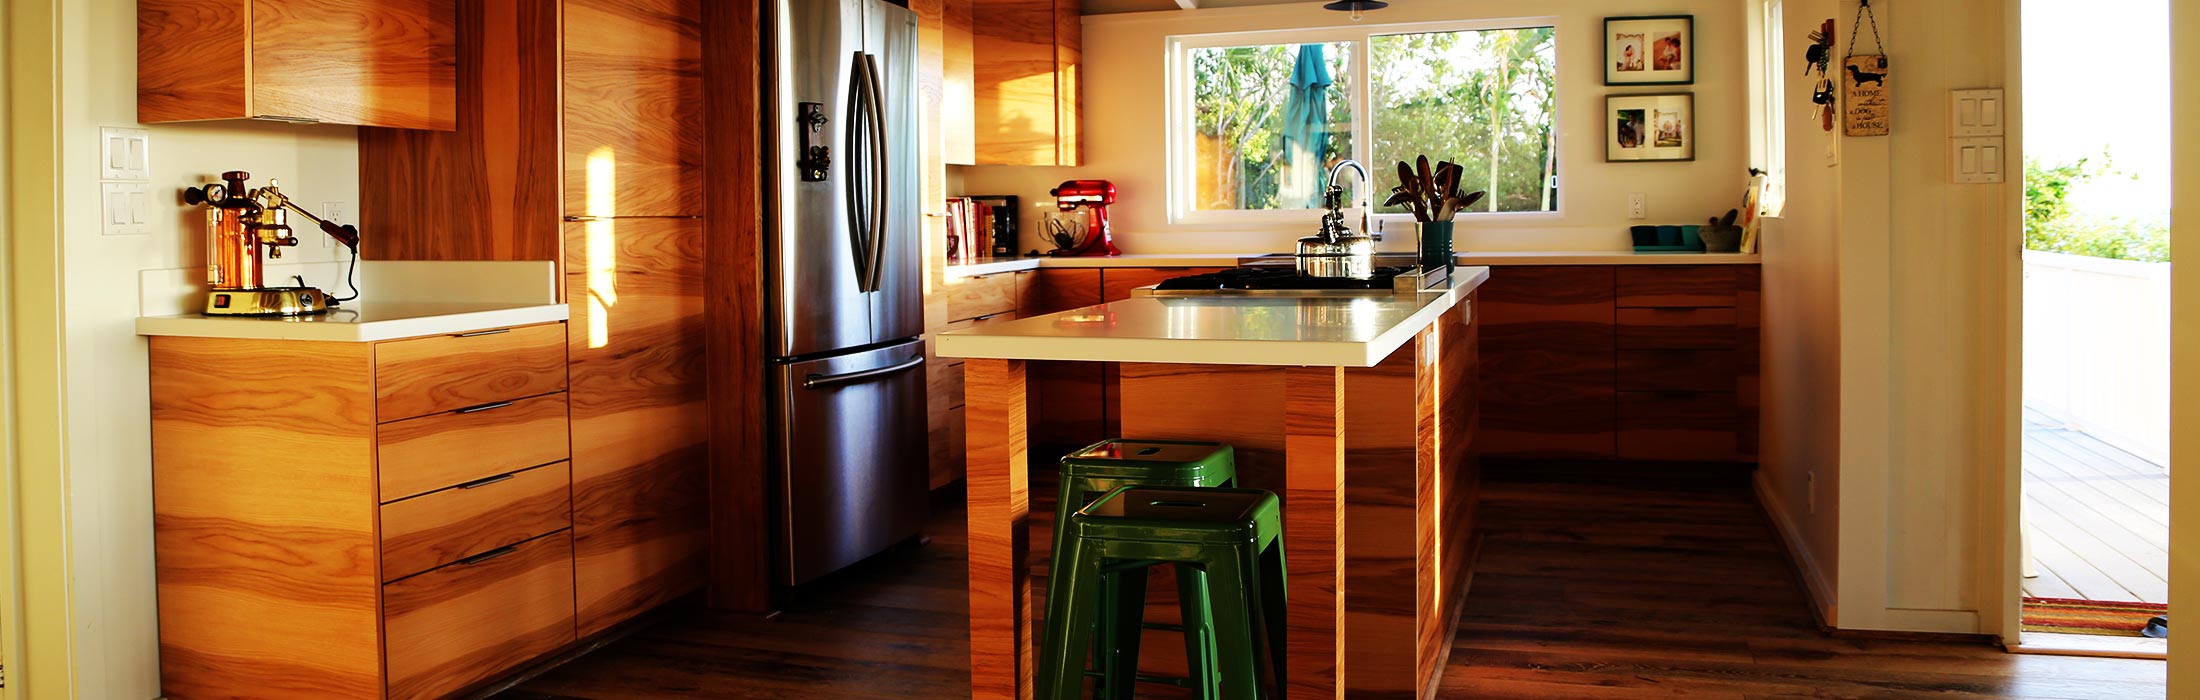 image of remodeled kitchen in hale koa home